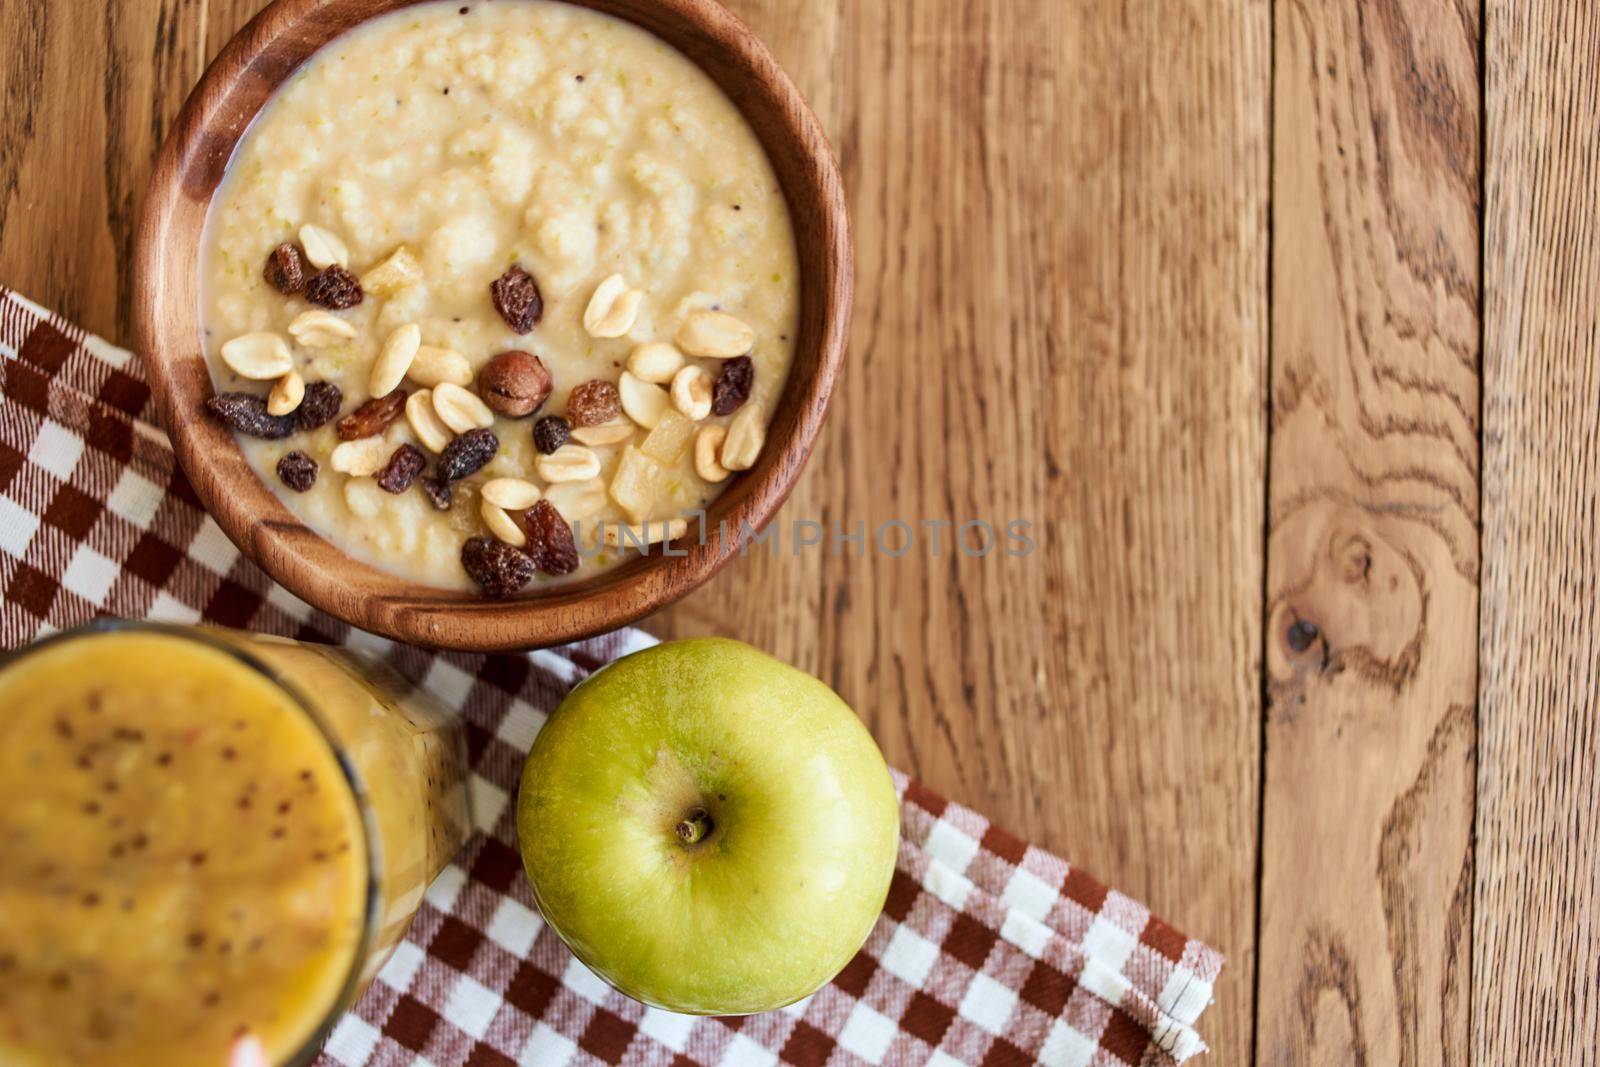 fruit plate dessert breakfast snack healthy food vitamins by Vichizh